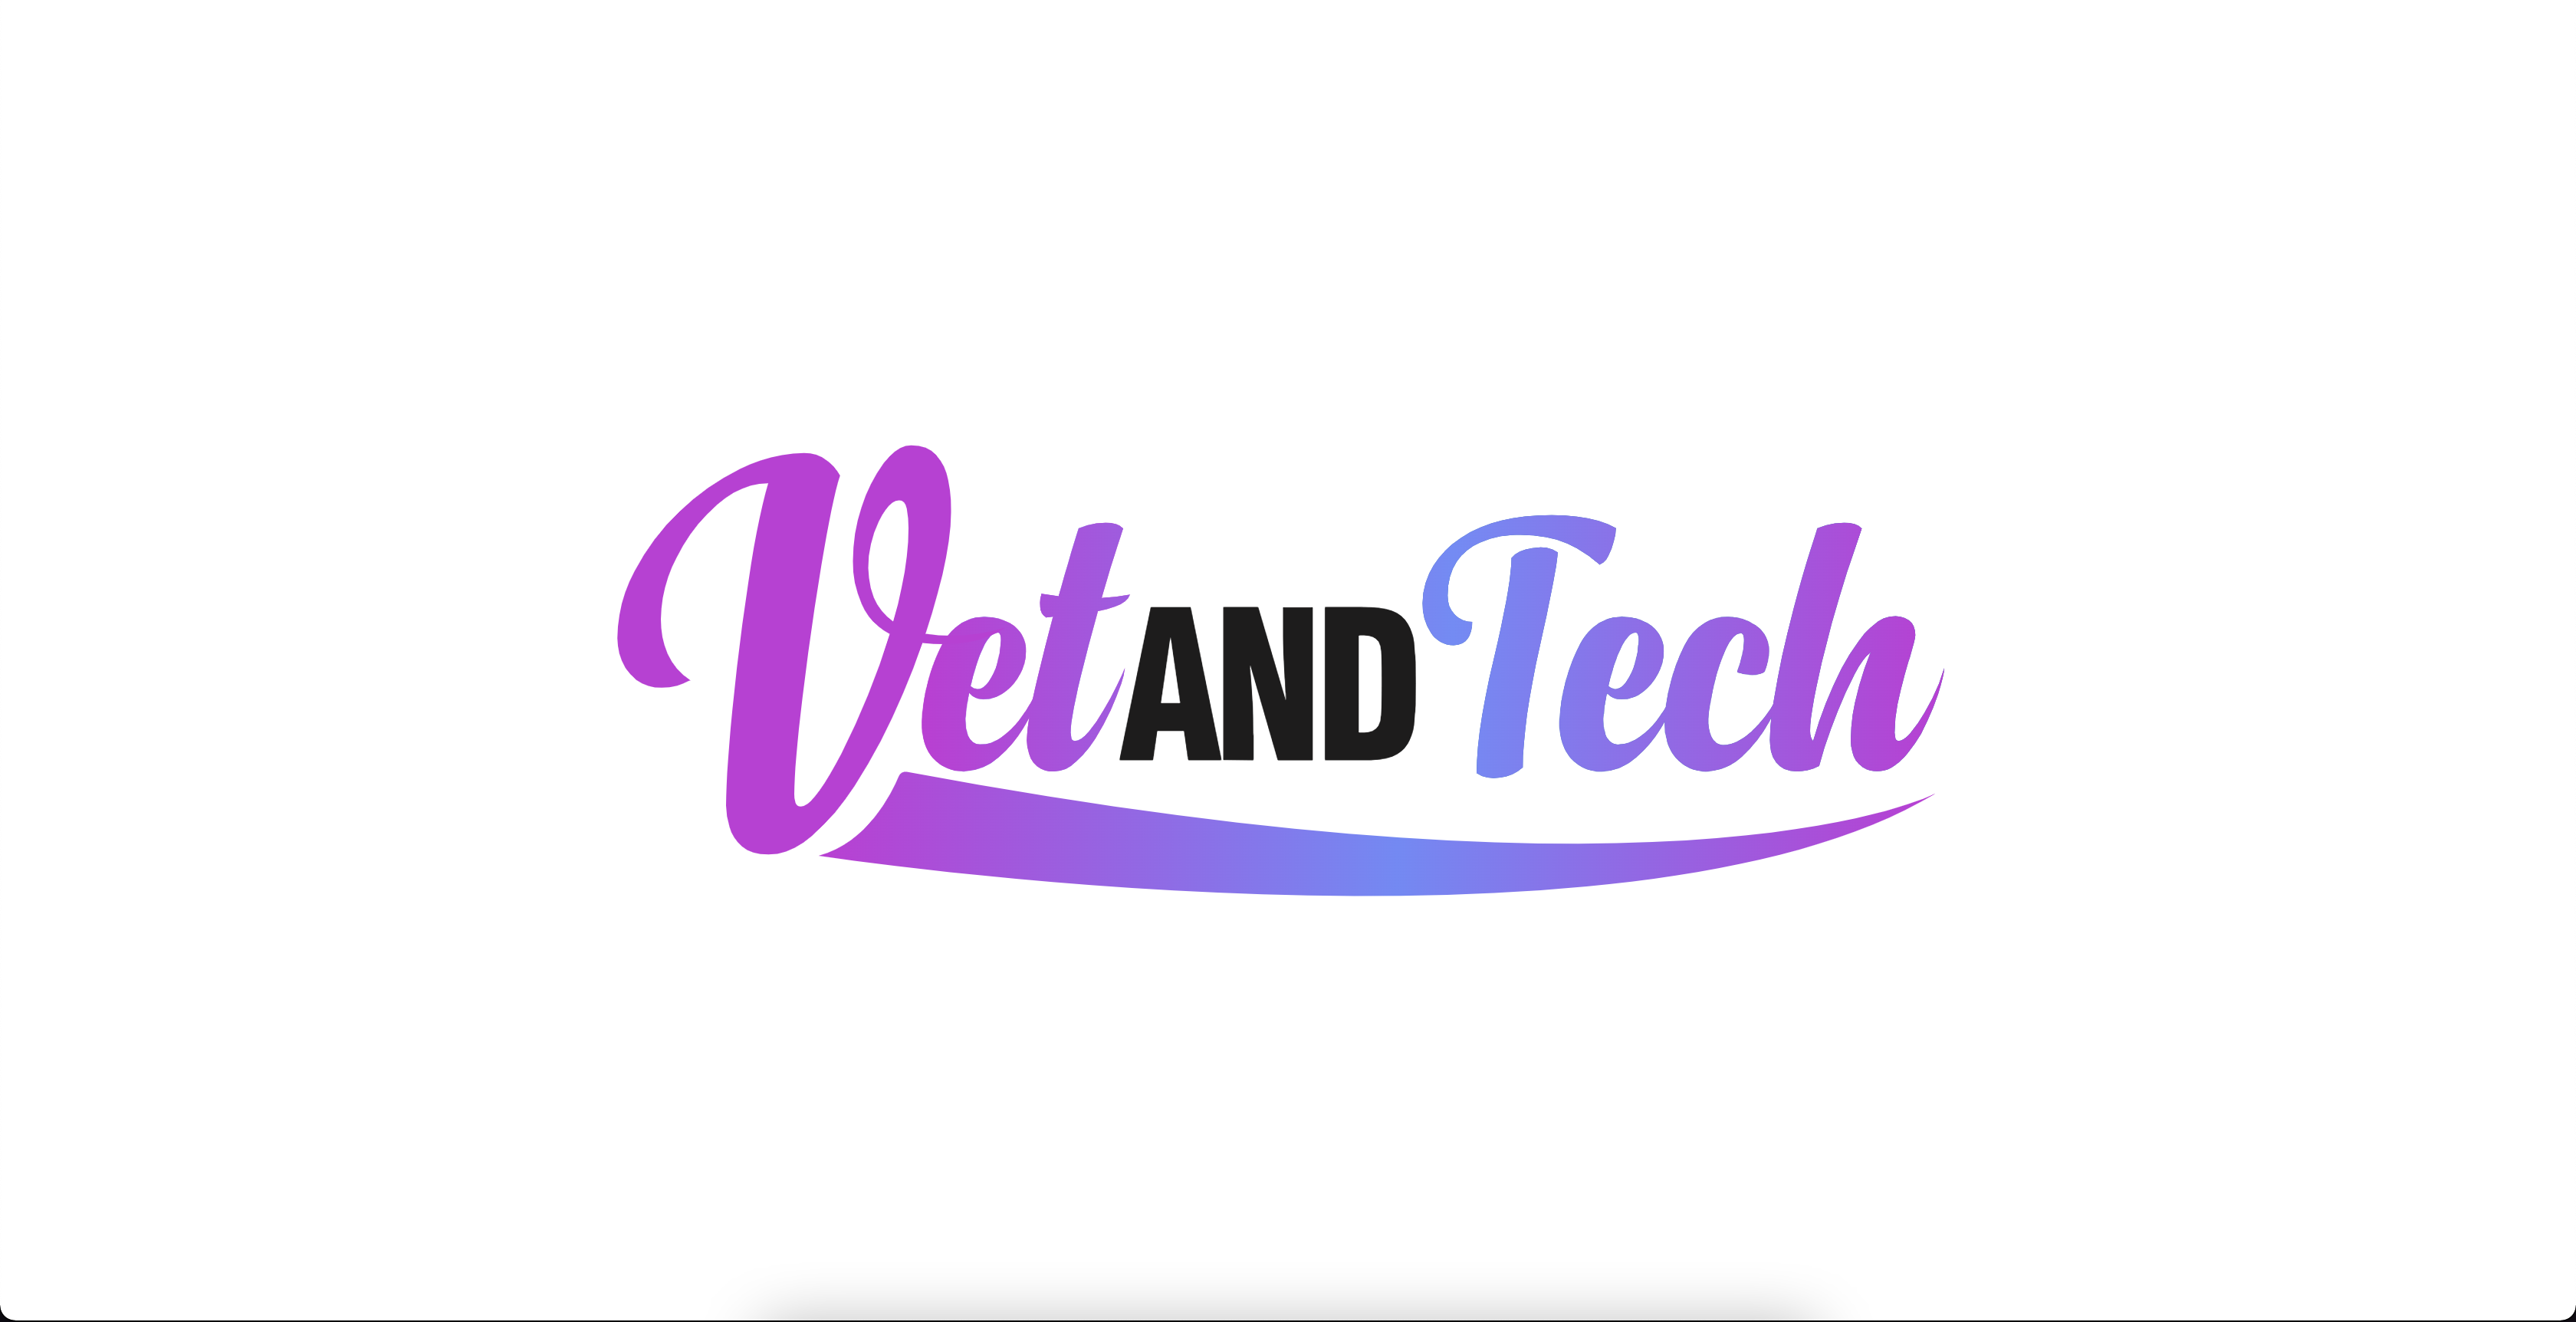 Vet And Tech